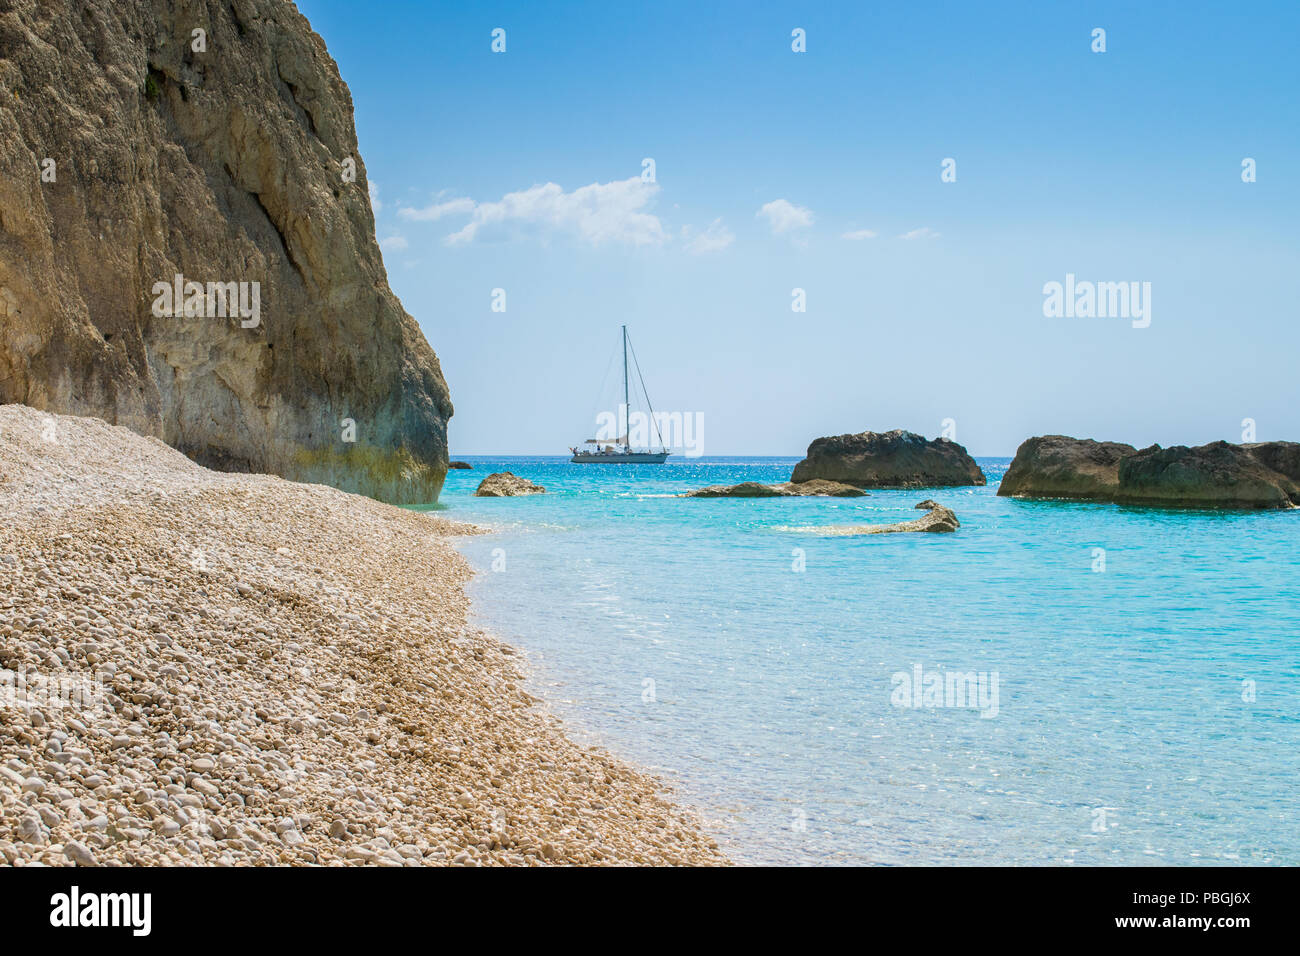 A boat is sailing into the turquoise sea waters of Porto katsiki in Lefkada Ionian island in Greece Stock Photo